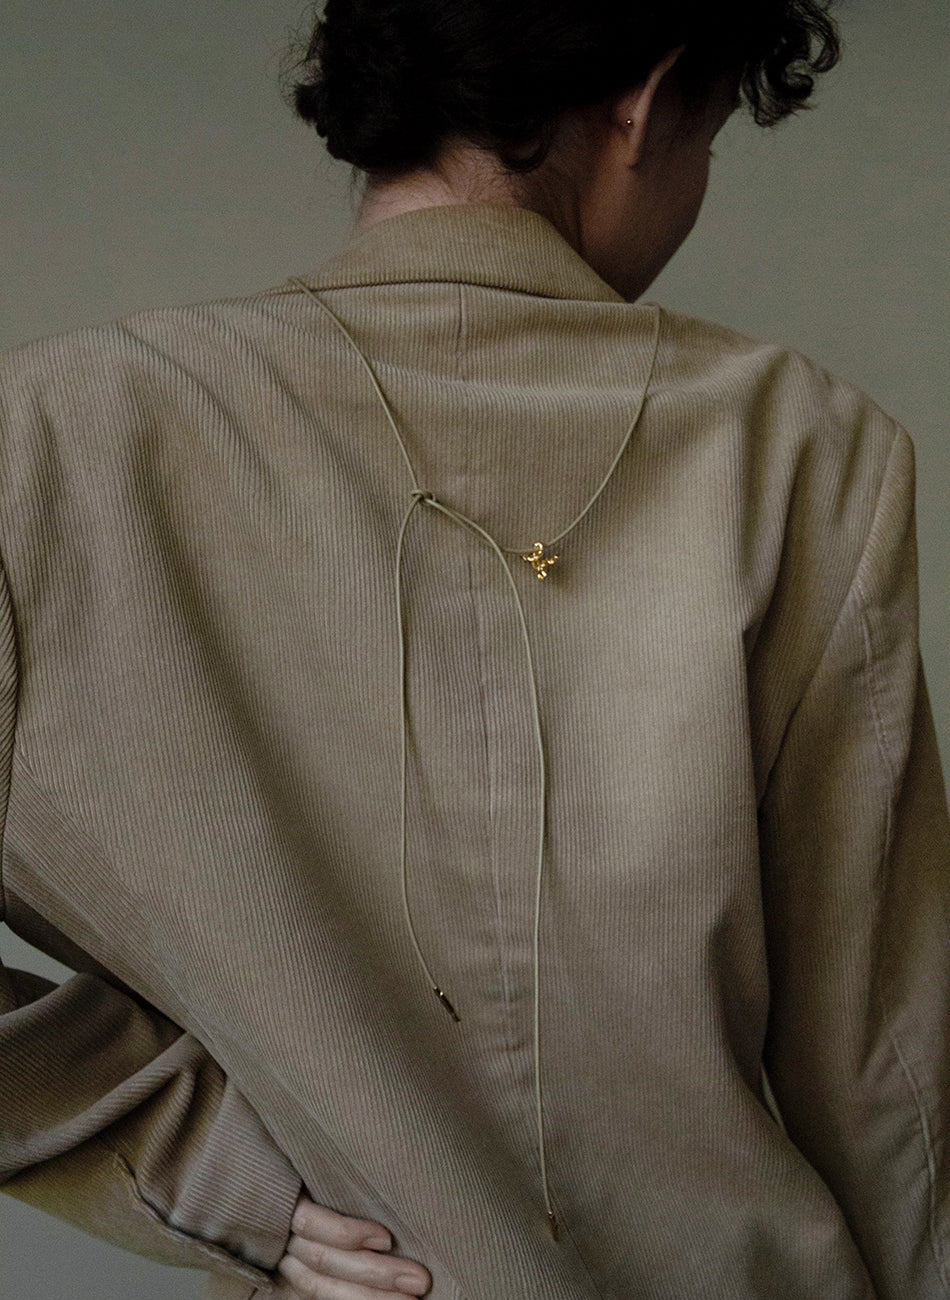 TWINE Alphabet – Bolo Leather Necklace